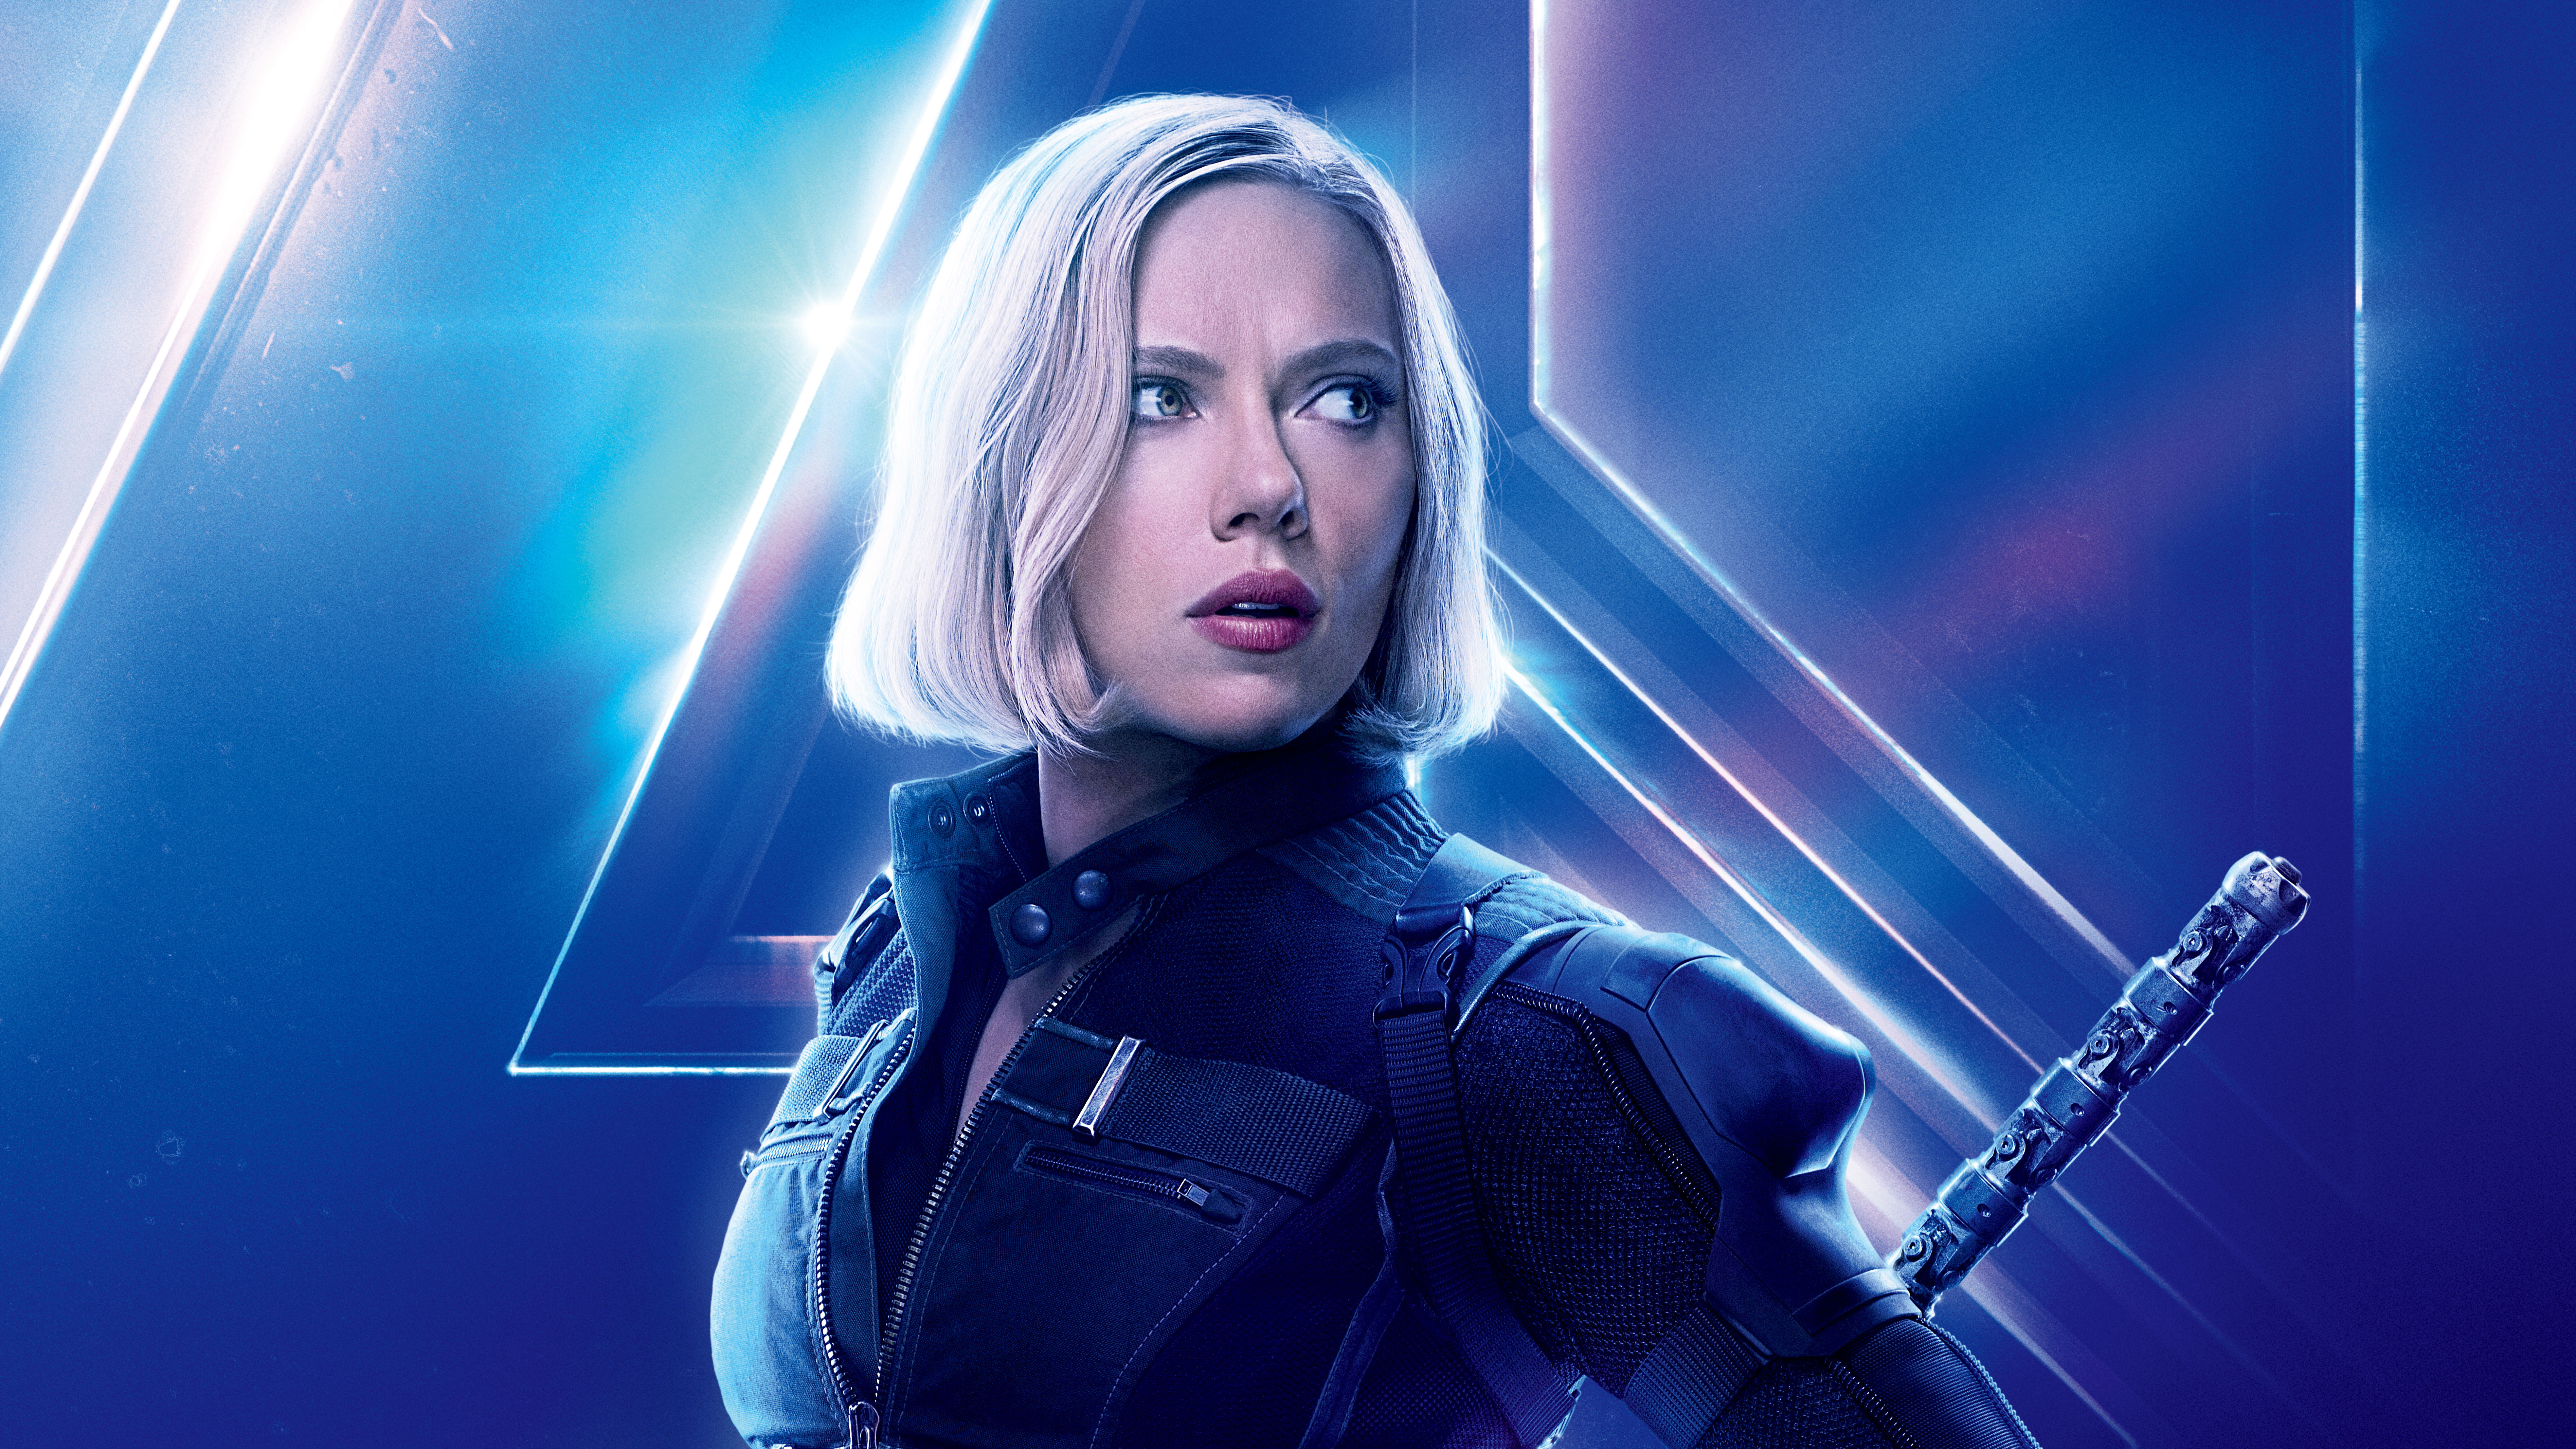 Wallpaper Avengers: Infinity War, Black Widow, Scarlett Johansson, 8k, Movies #179117871 x 4427